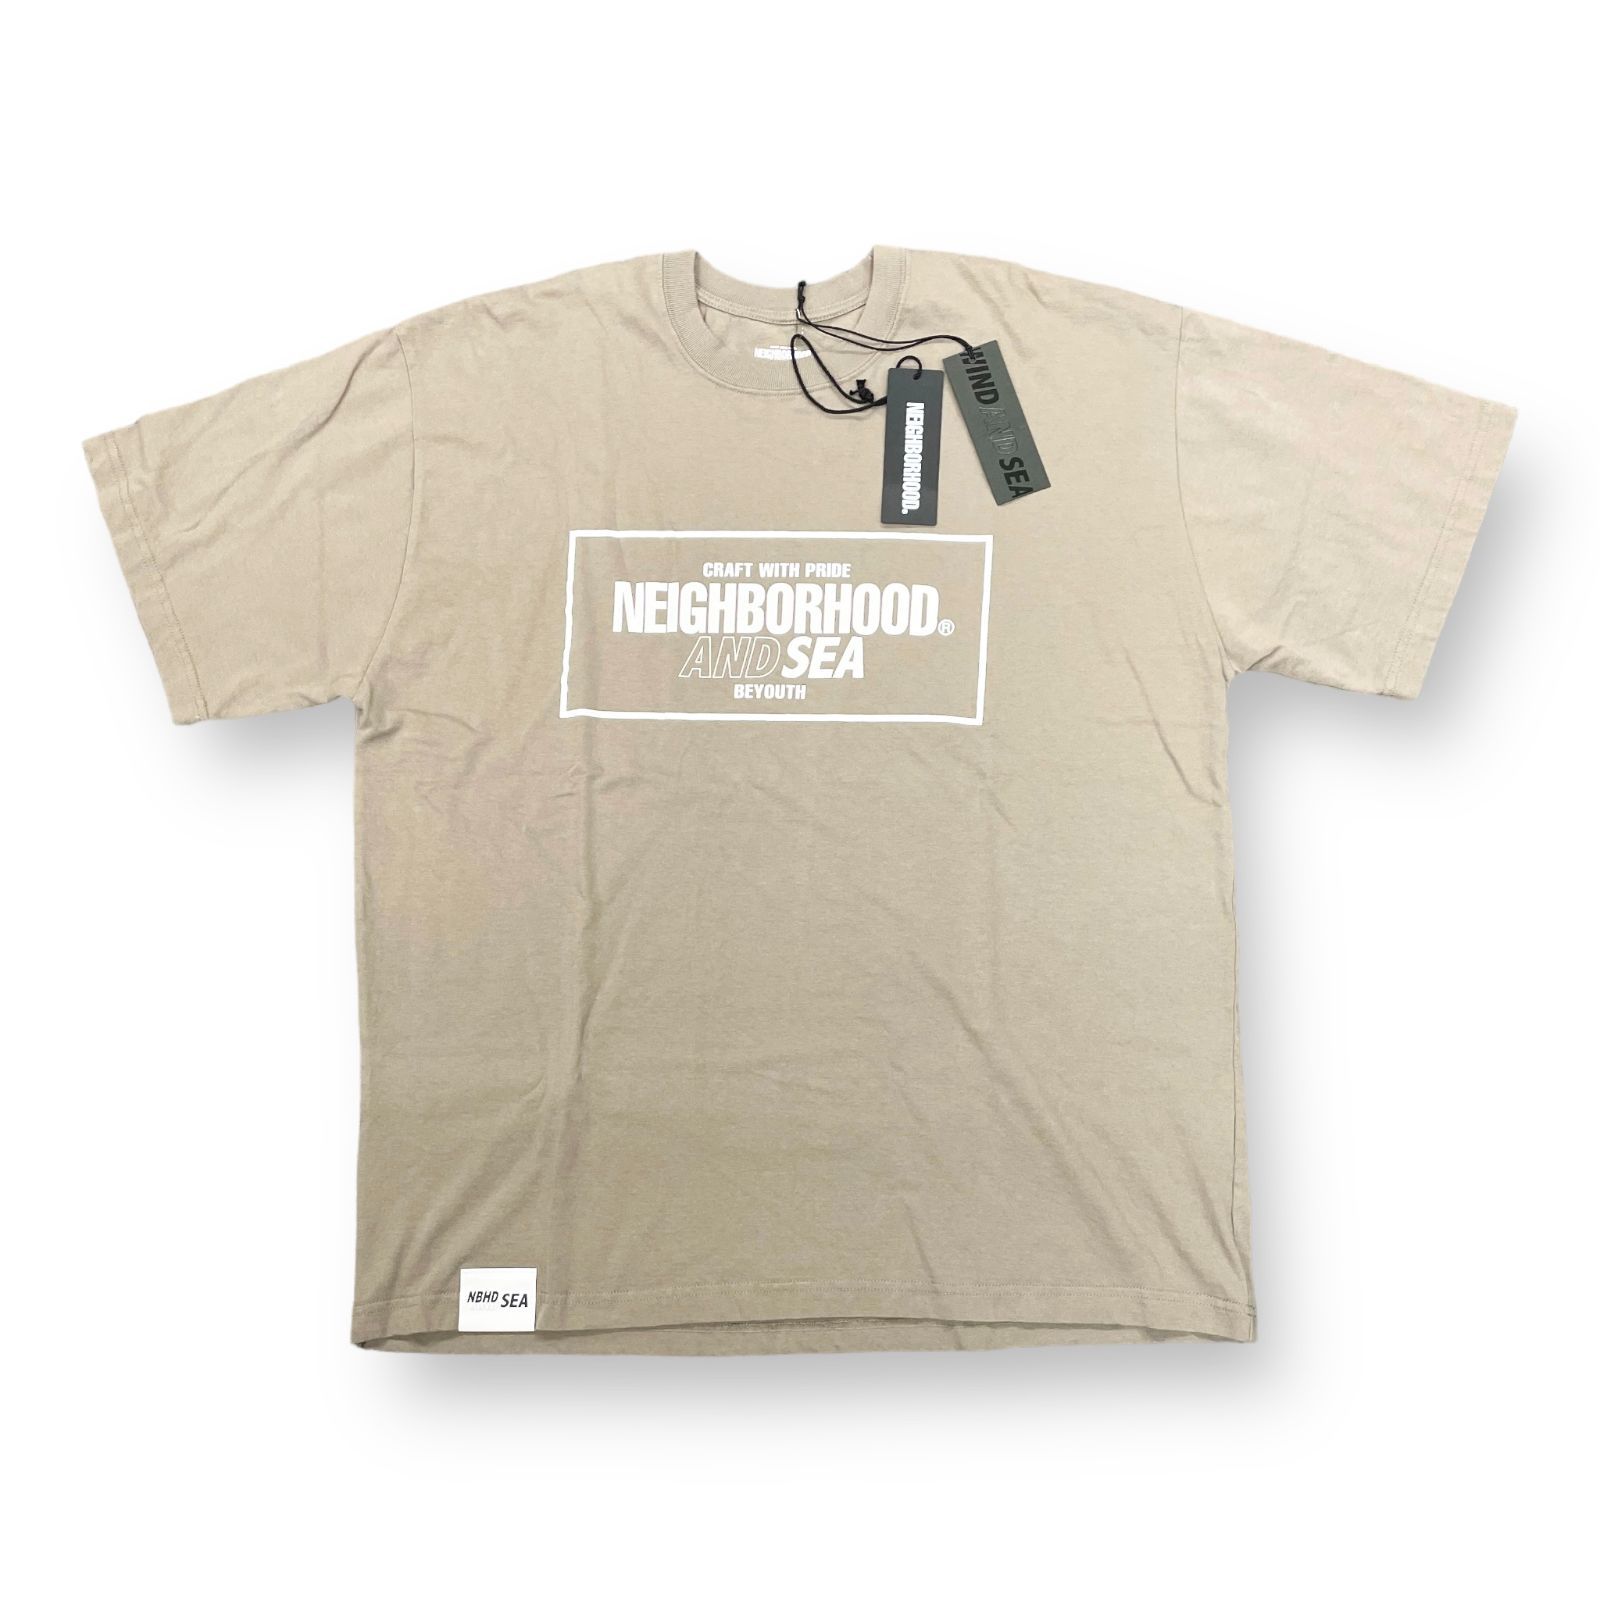 NEIGHBORHOOD WIND AND SEA Tシャツ XLウィンダンシー - www